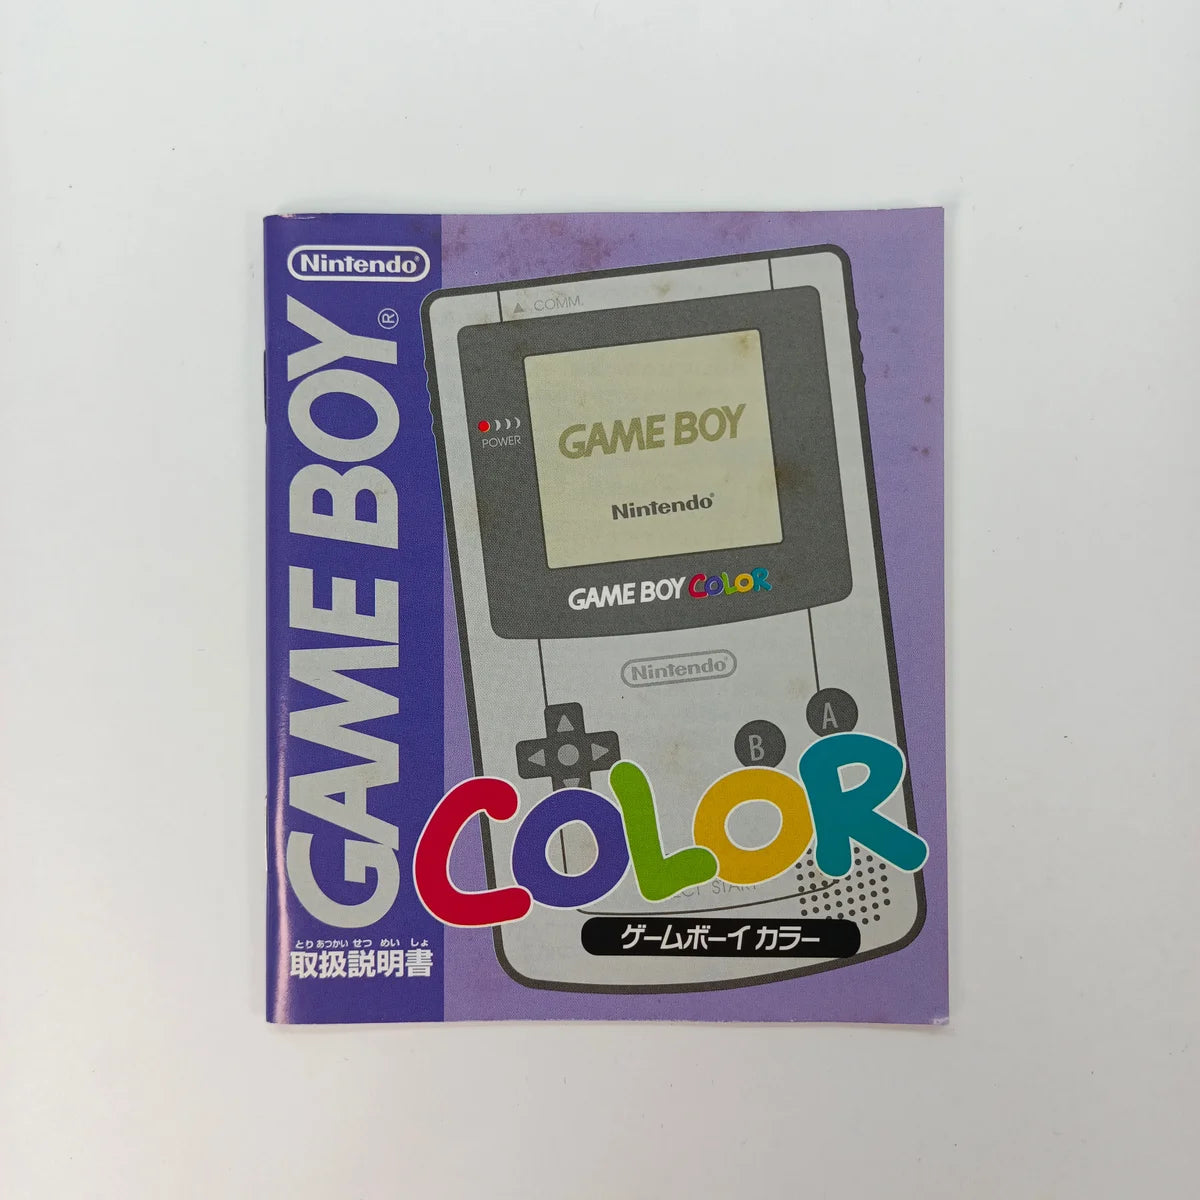 Game Boy Color Clear Purple